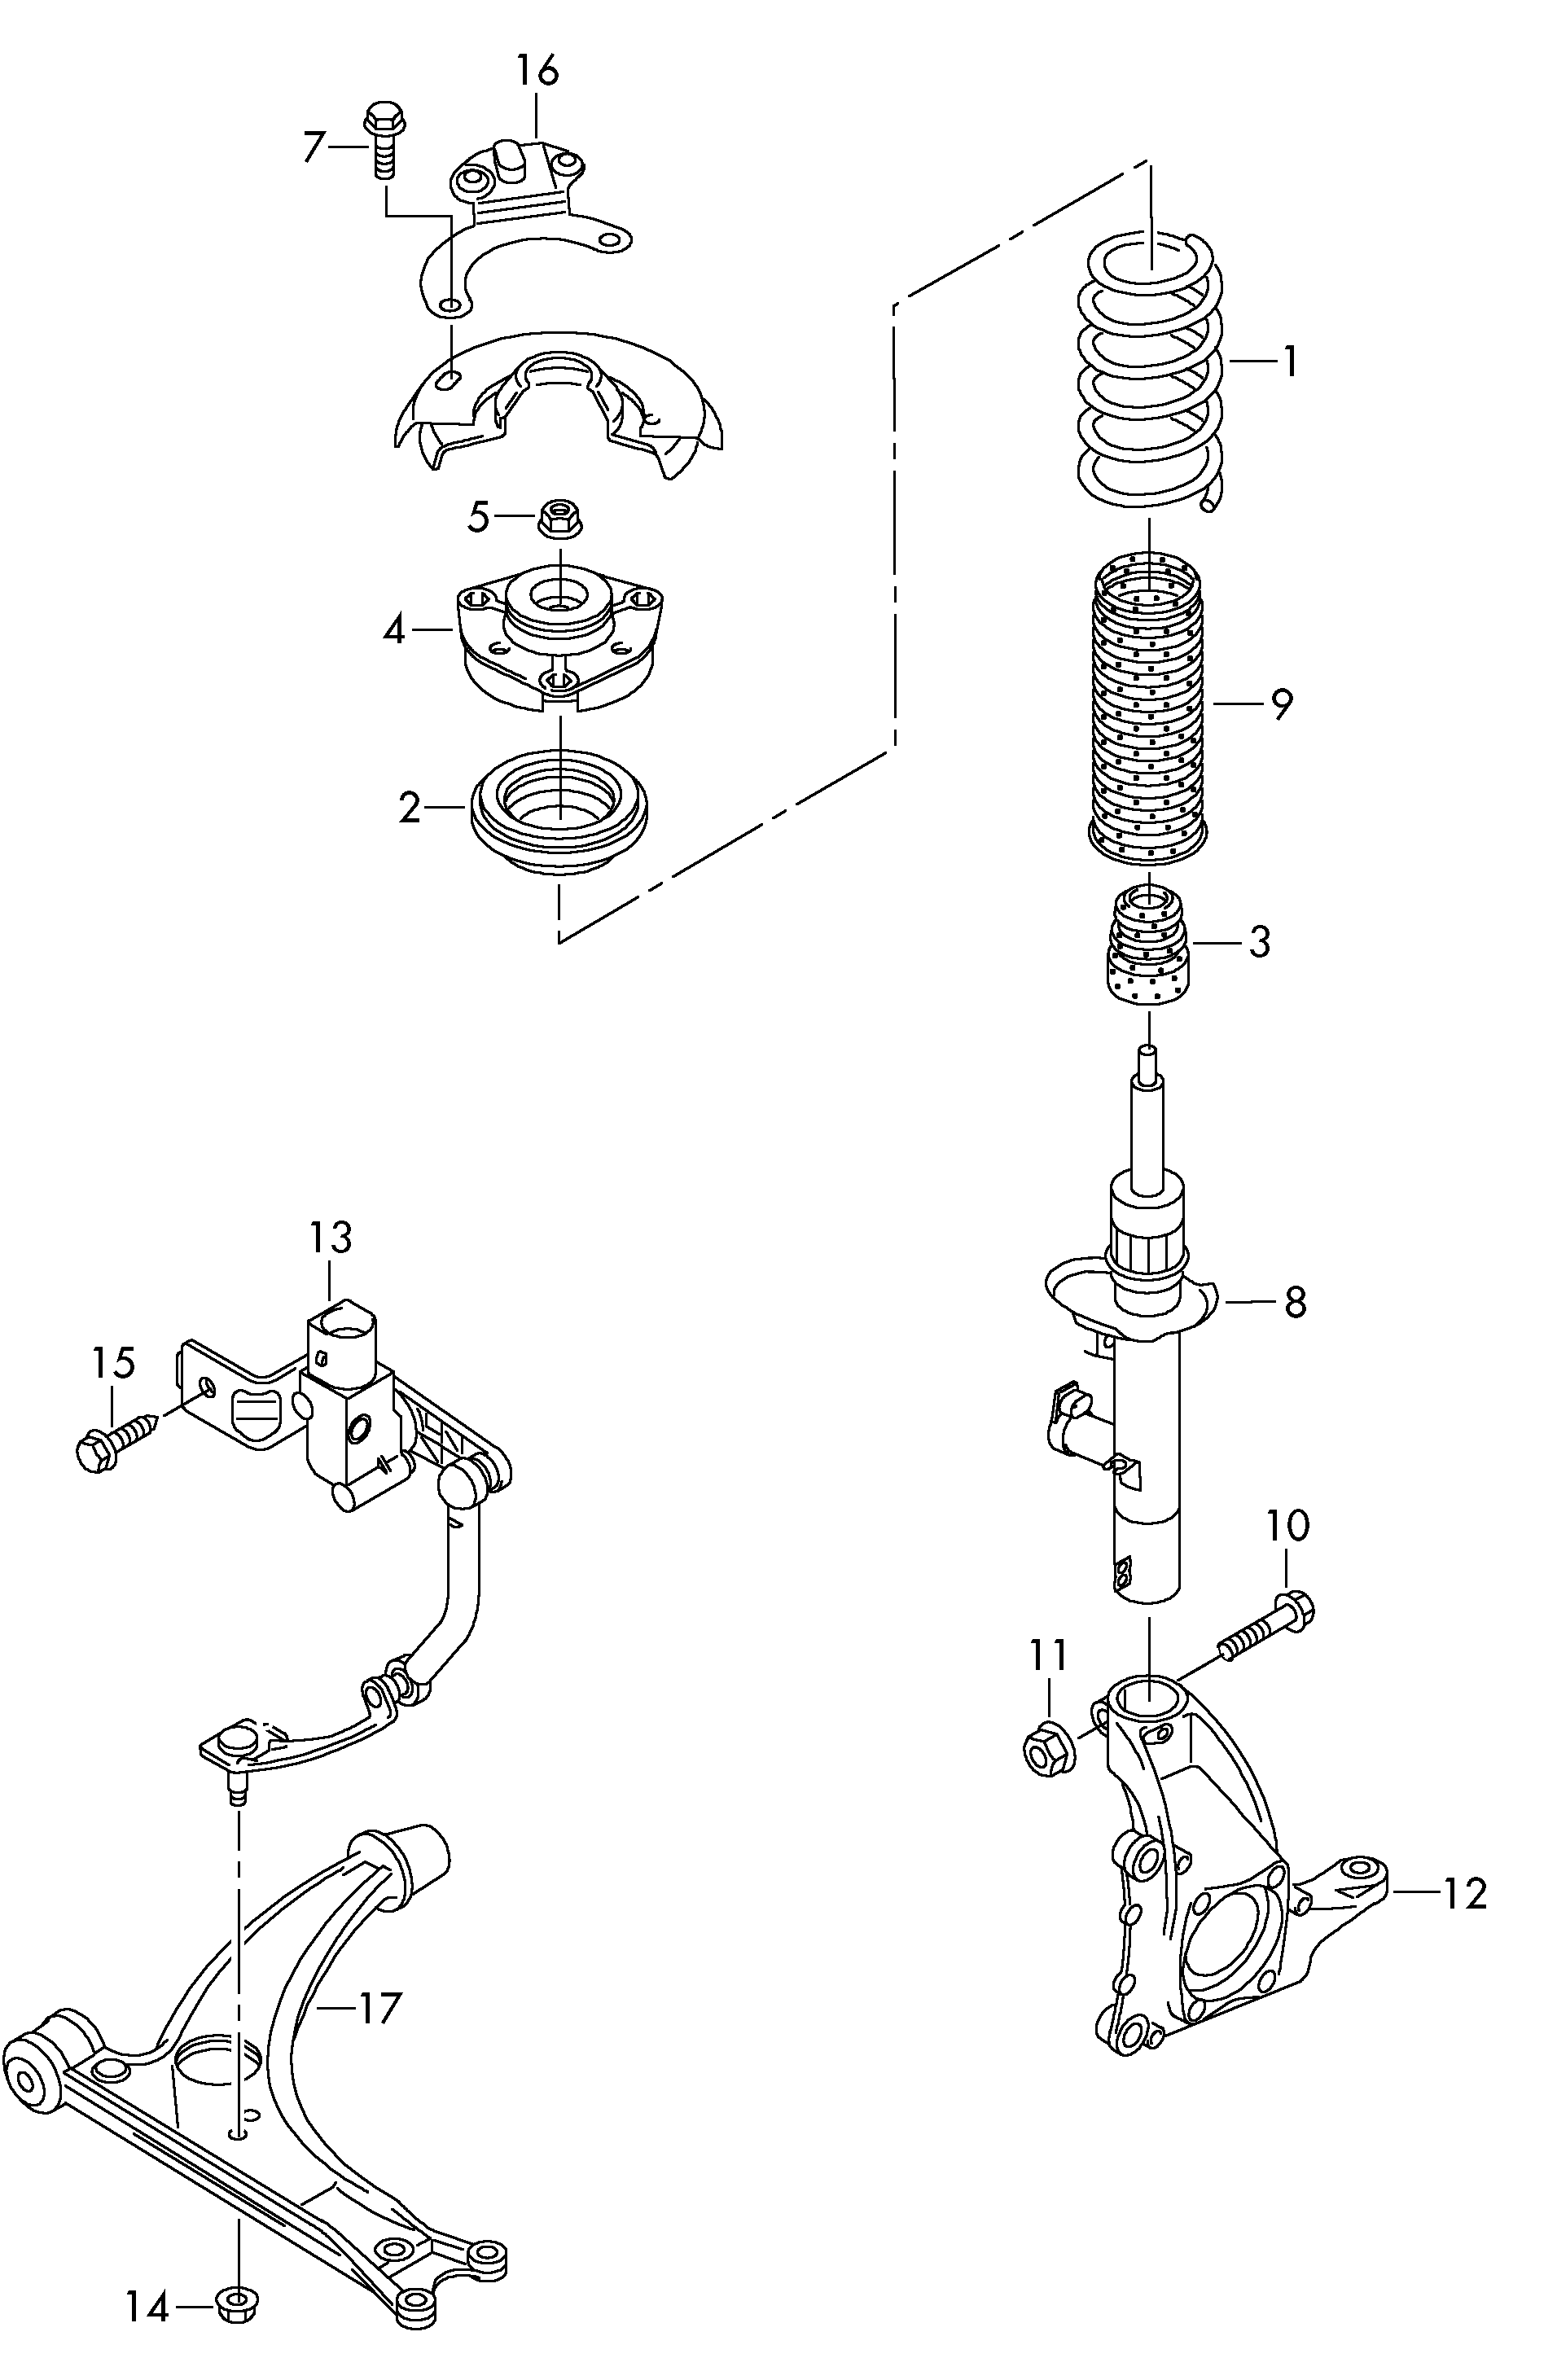 suspensionAmortisseurp. vehicules avec amortisseurs<br>a regulation electronique av - Tiguan - tig